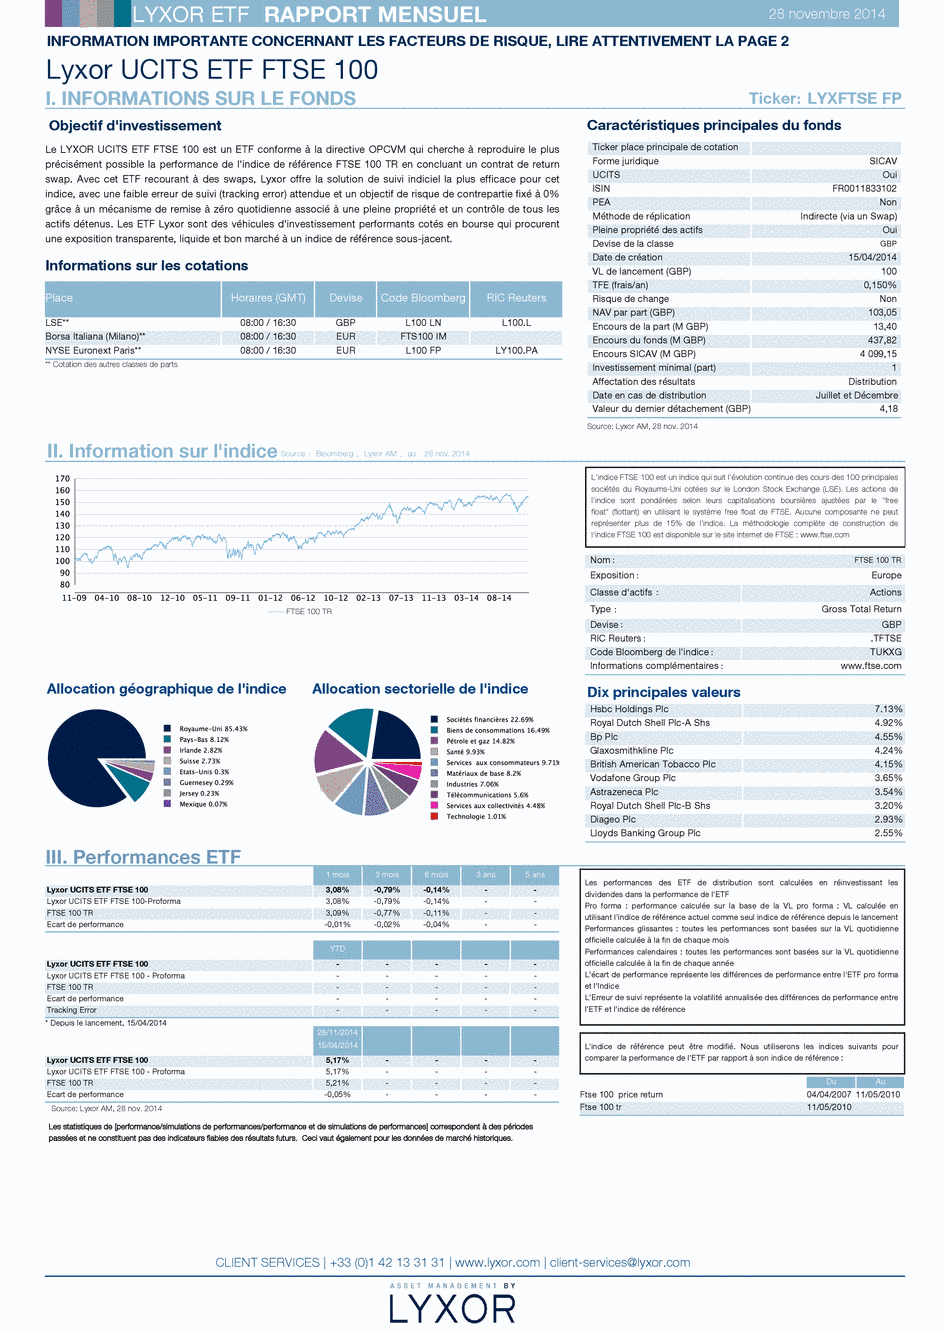 Reporting LYXOR UCITS ETF FTSE 100 D-GBP - 30/11/2014 - Français